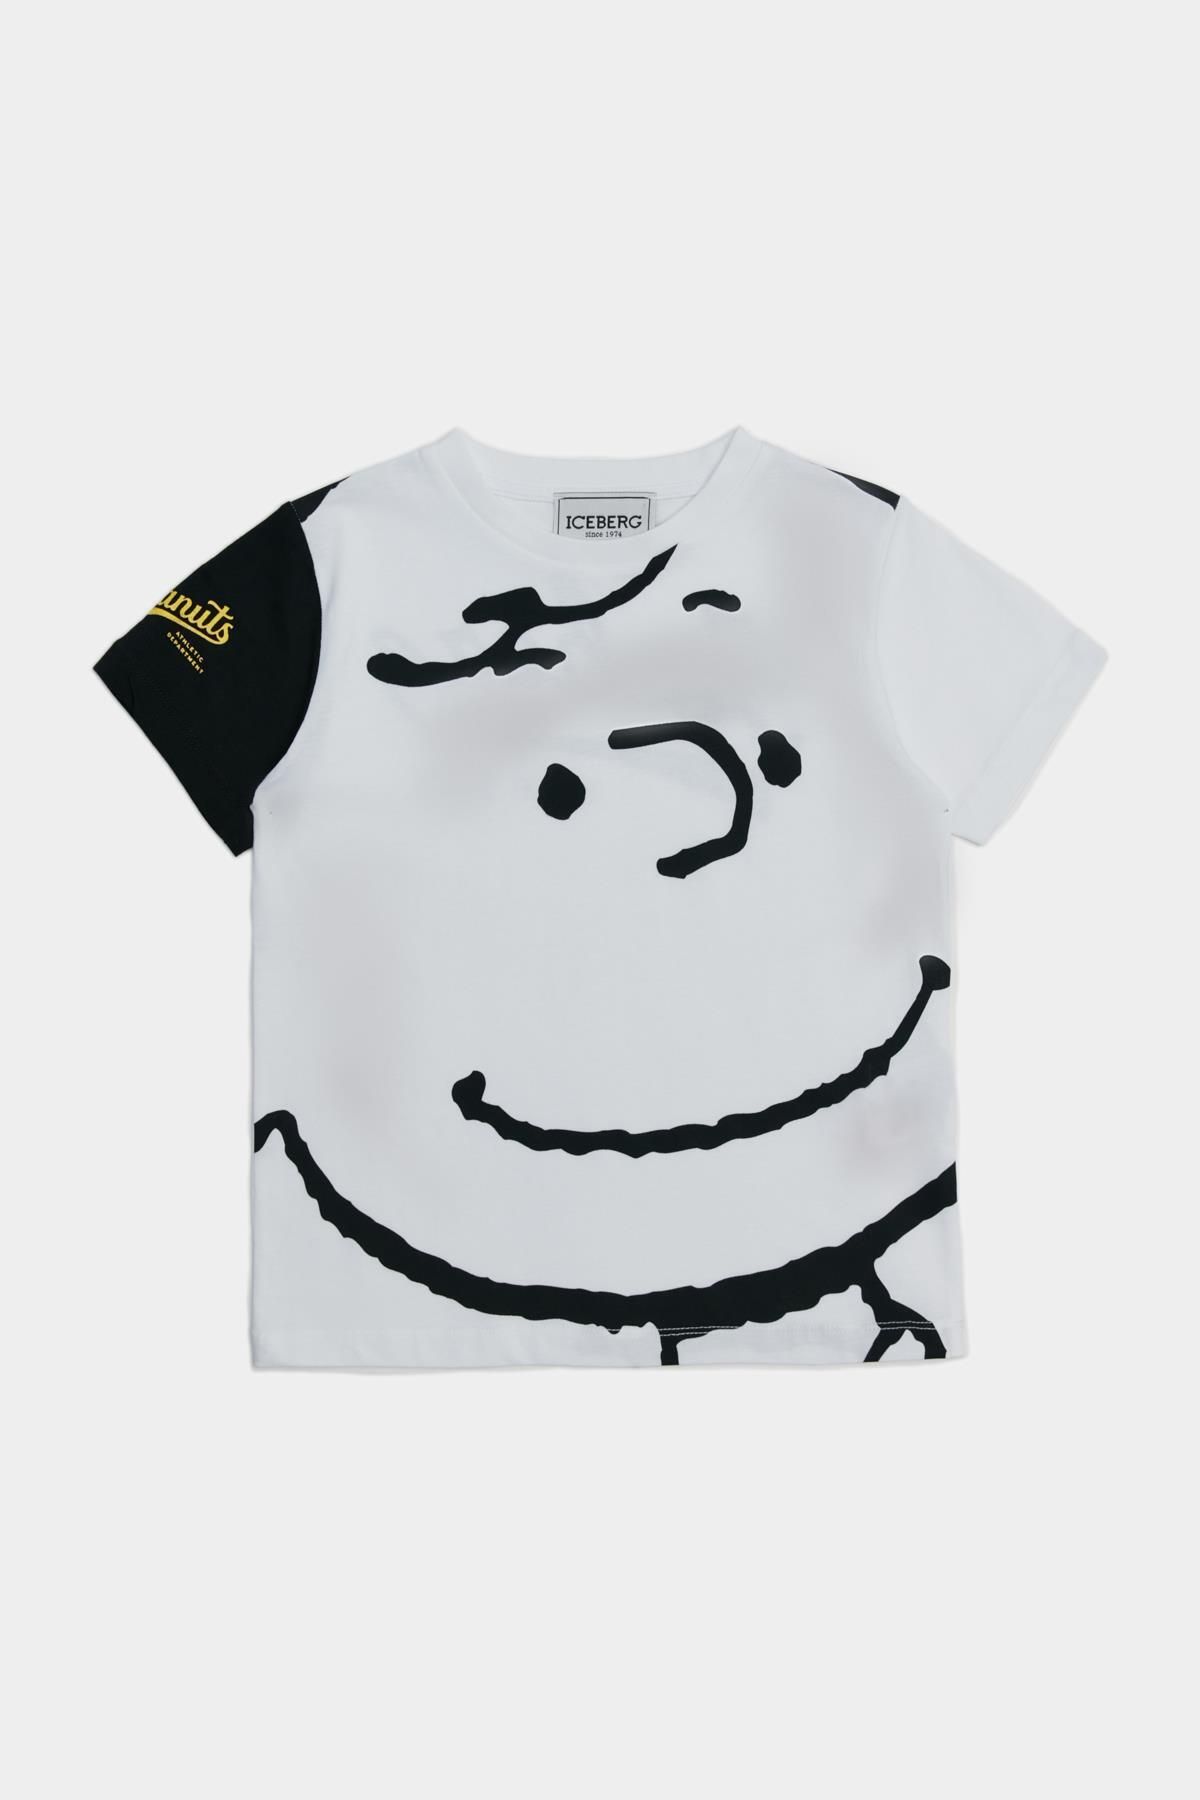 Iceberg Bg Store Erkek Çocuk Beyaz T-shirt 23ssıts3129